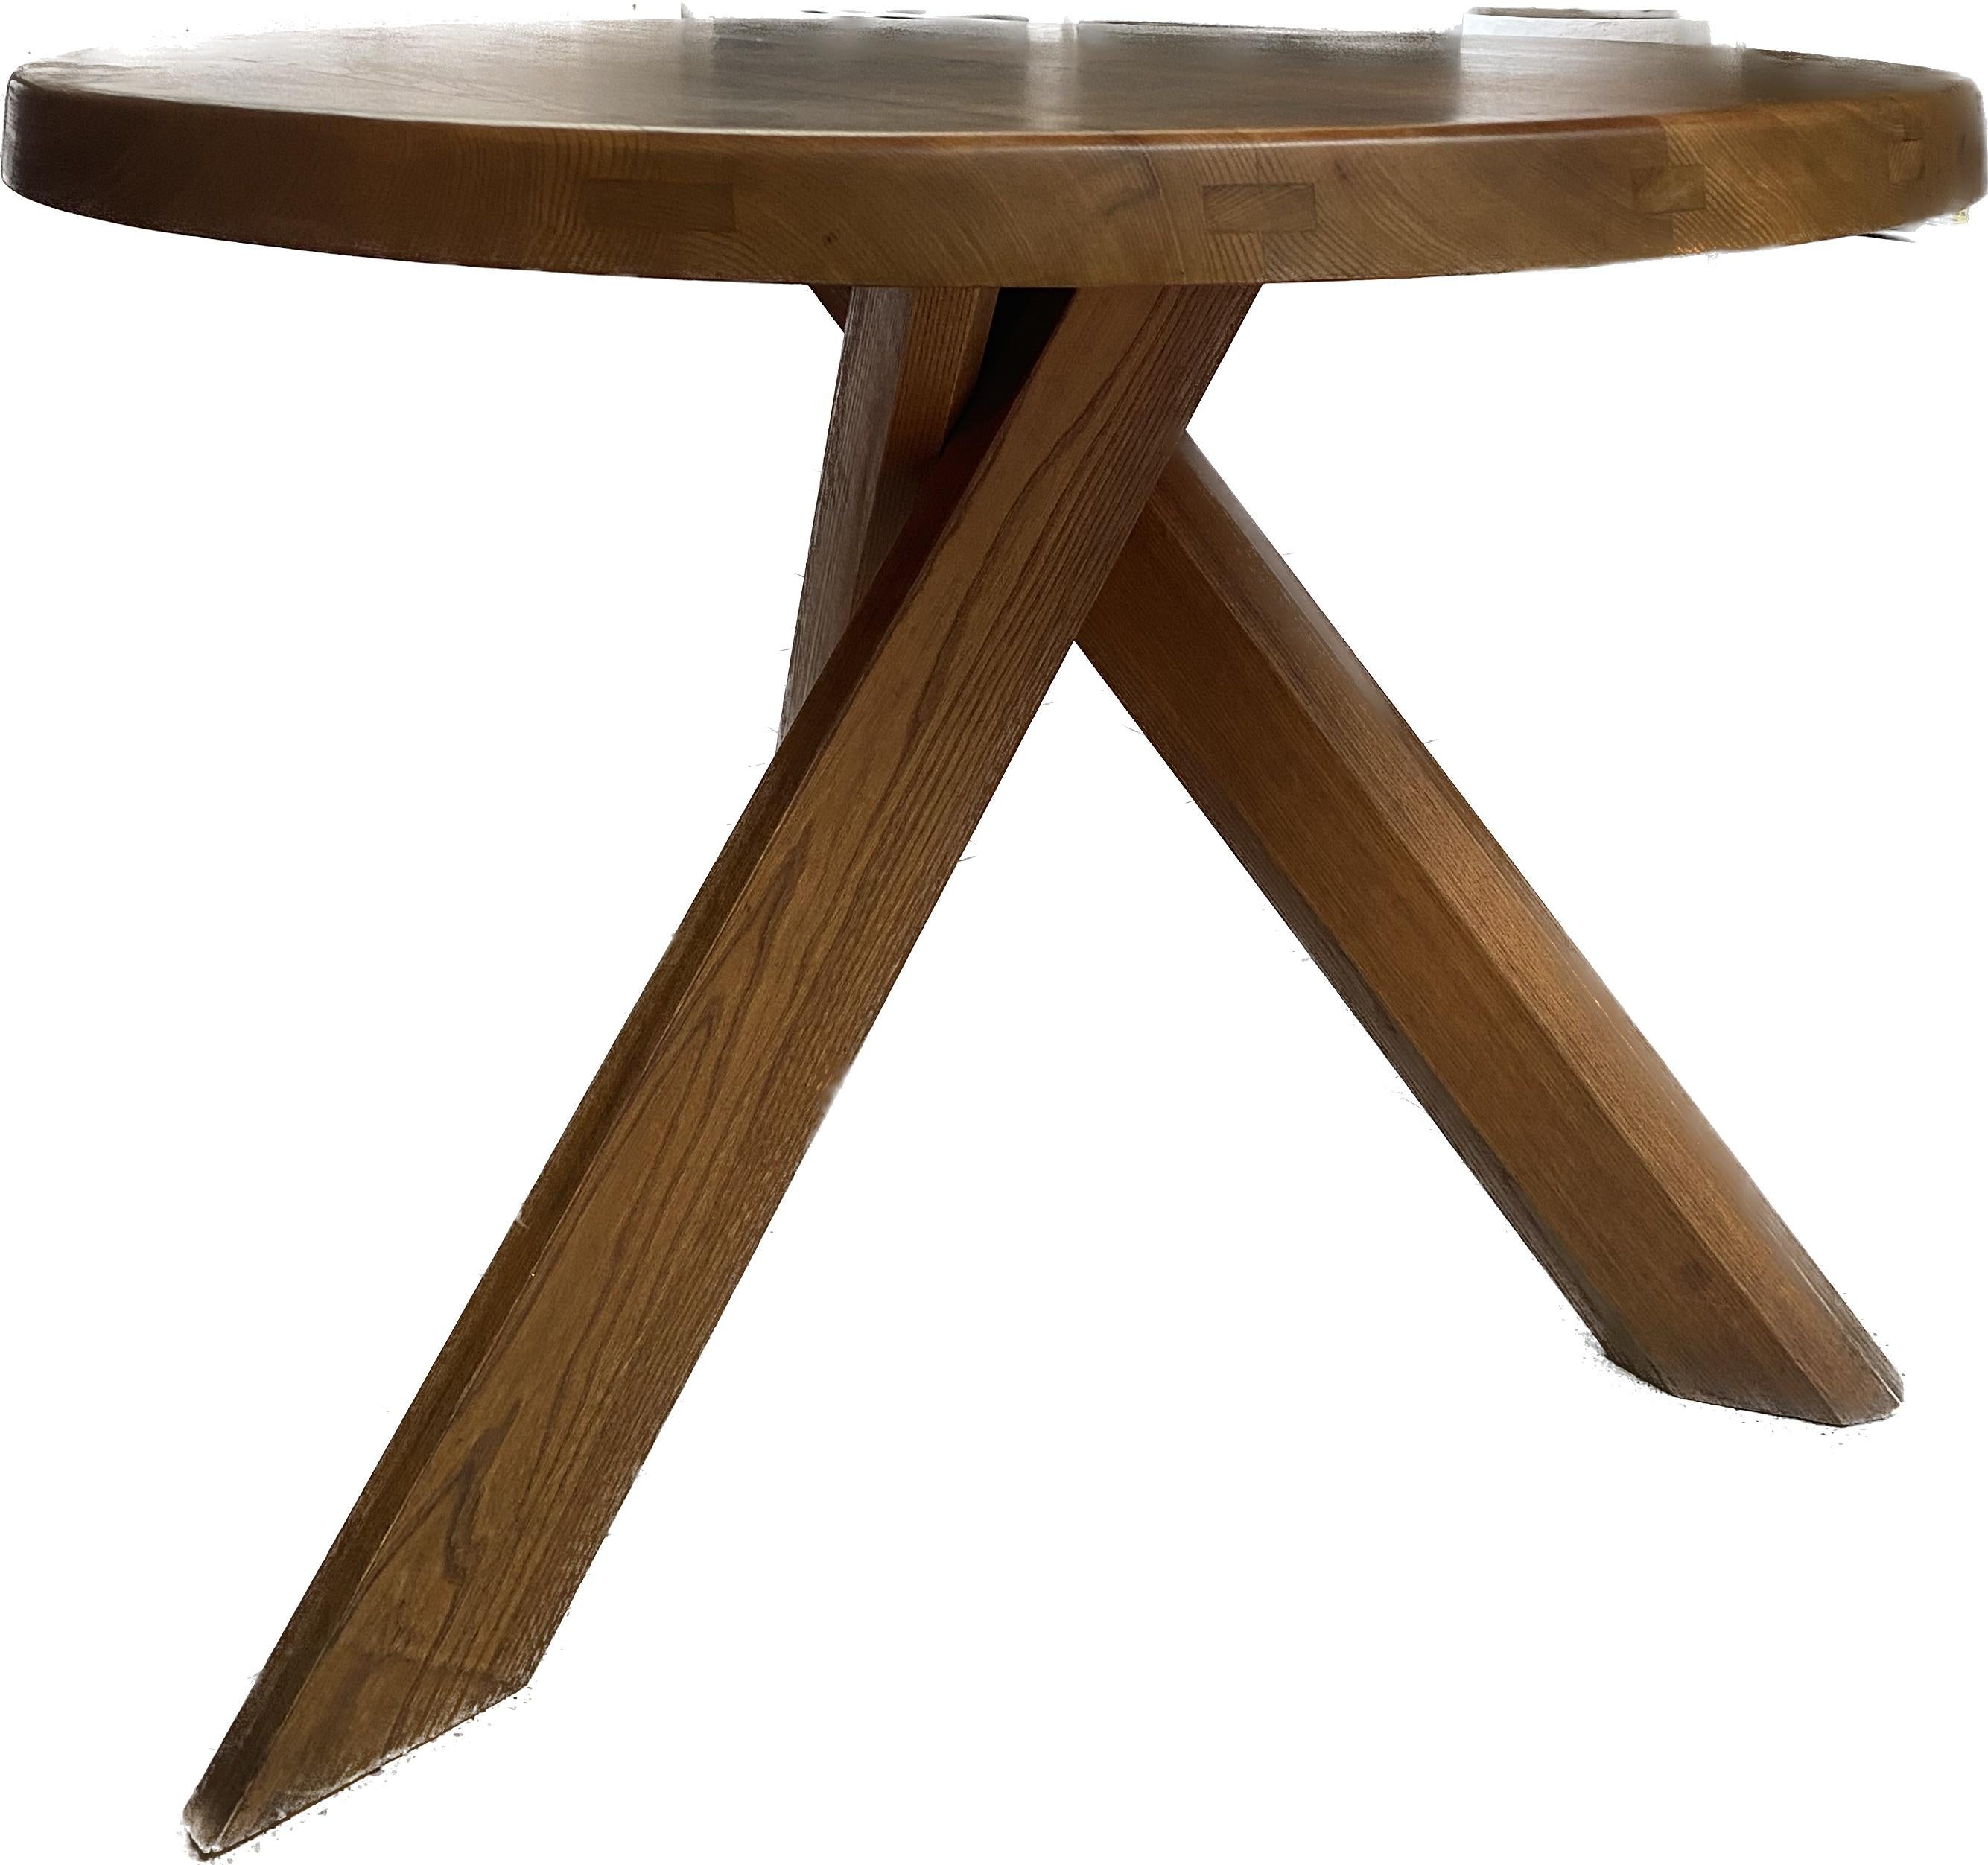 SFAX table - Pierre Chapo - 
Solid elm and SFAX leg
Circa 1972
Dimensions :ø94xh72cm
Ref : 4079/14
Price :14900€